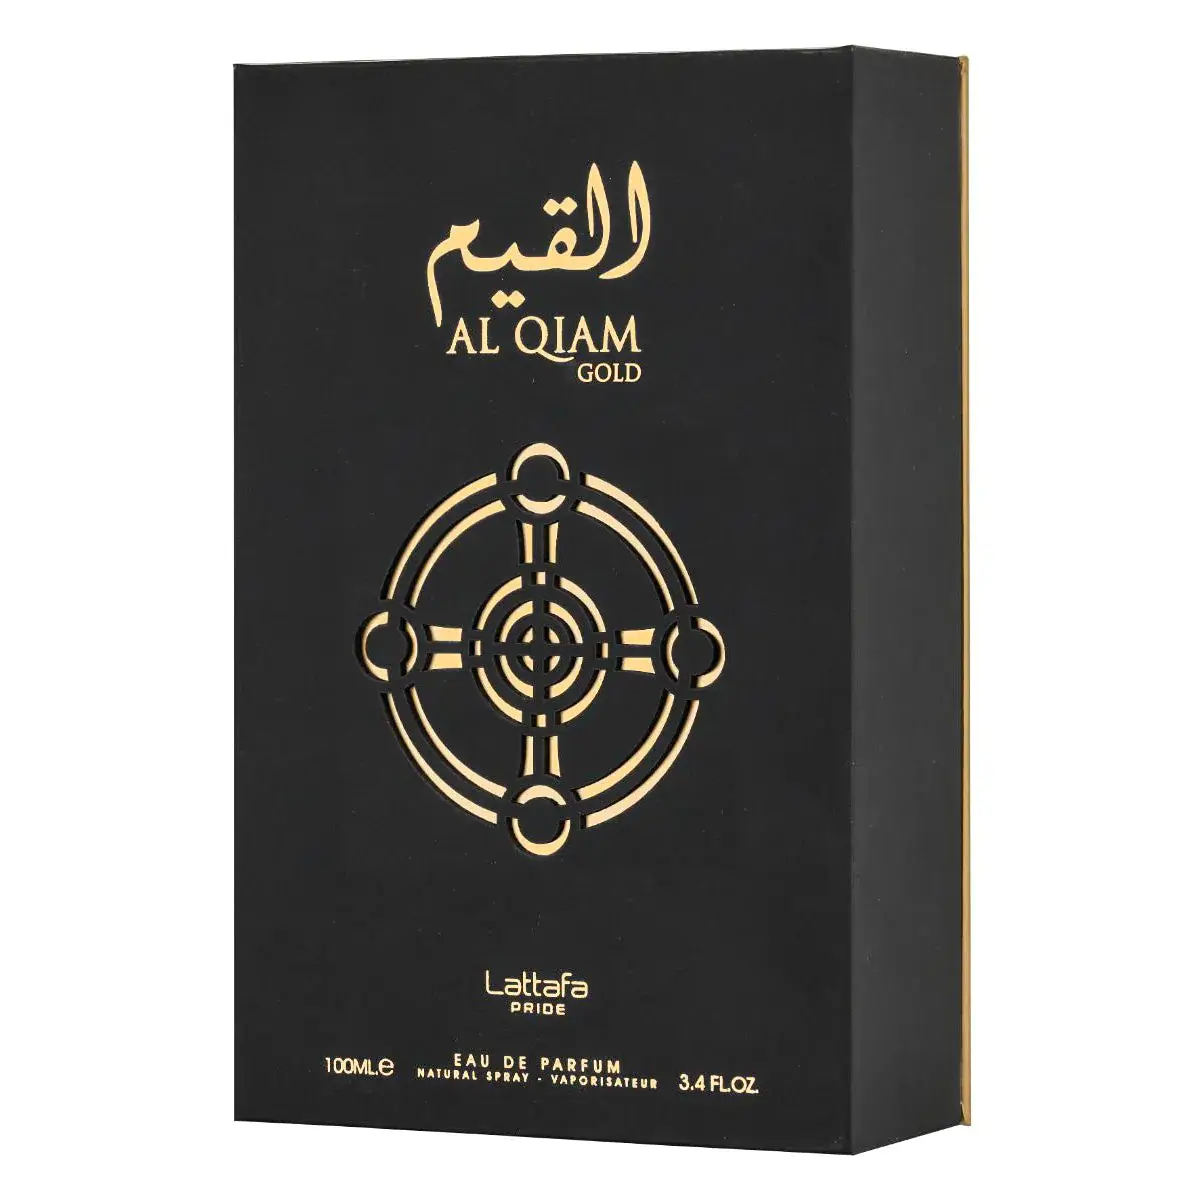 Al Qiam Gold Perfume / Eau De Parfum 100Ml By Lattafa Pride 